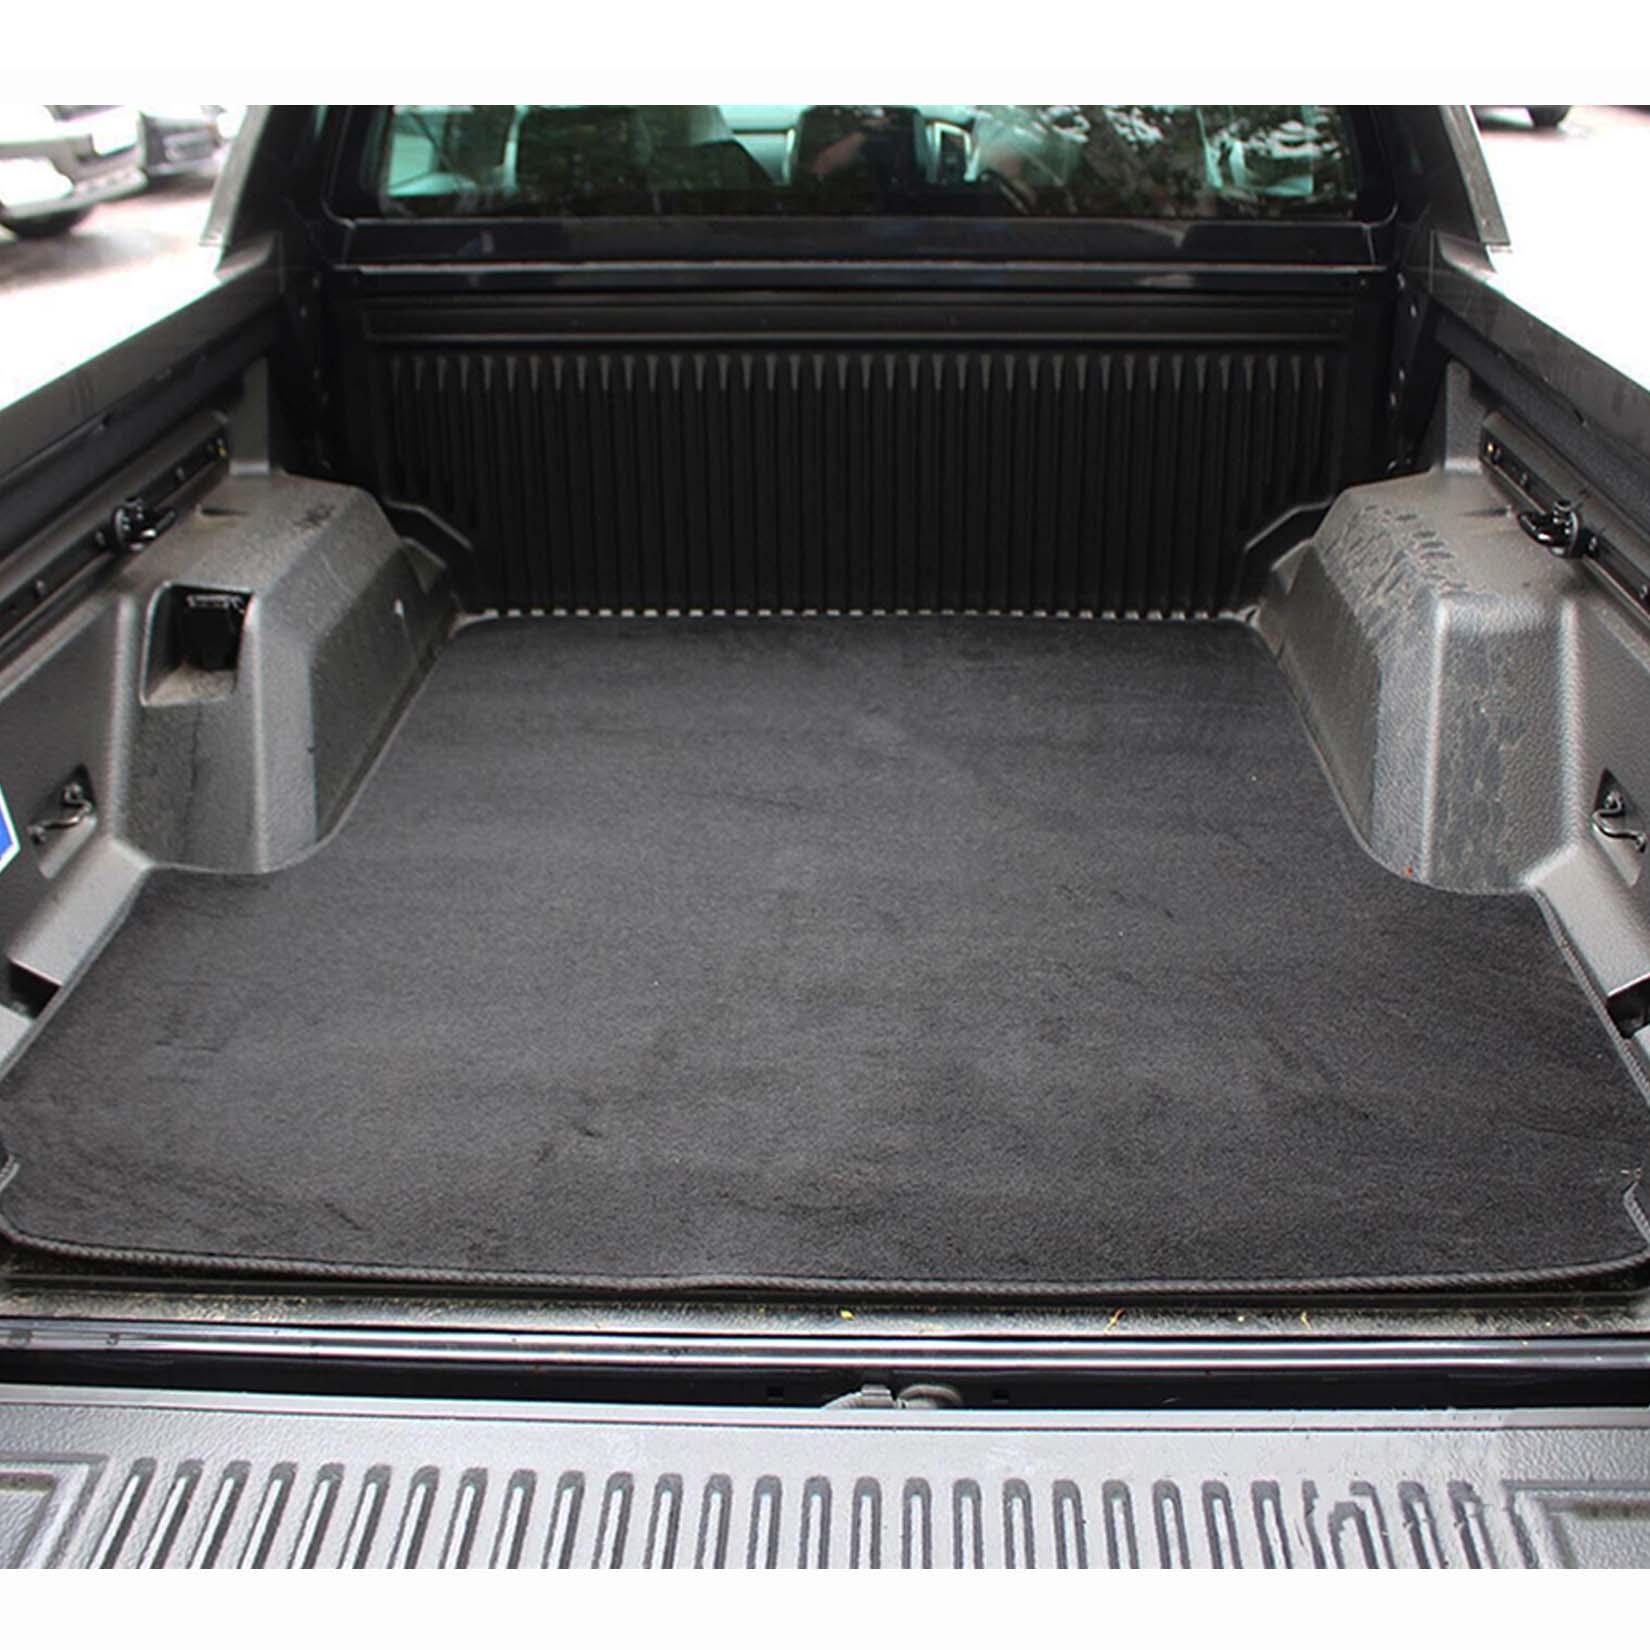 MITSUBISHI L200 SERIES 5 - FIAT FULLBACK - 2015 ON - DOUBLE CAB LOAD BED CARPET MAT - BLACK - Storm Xccessories2